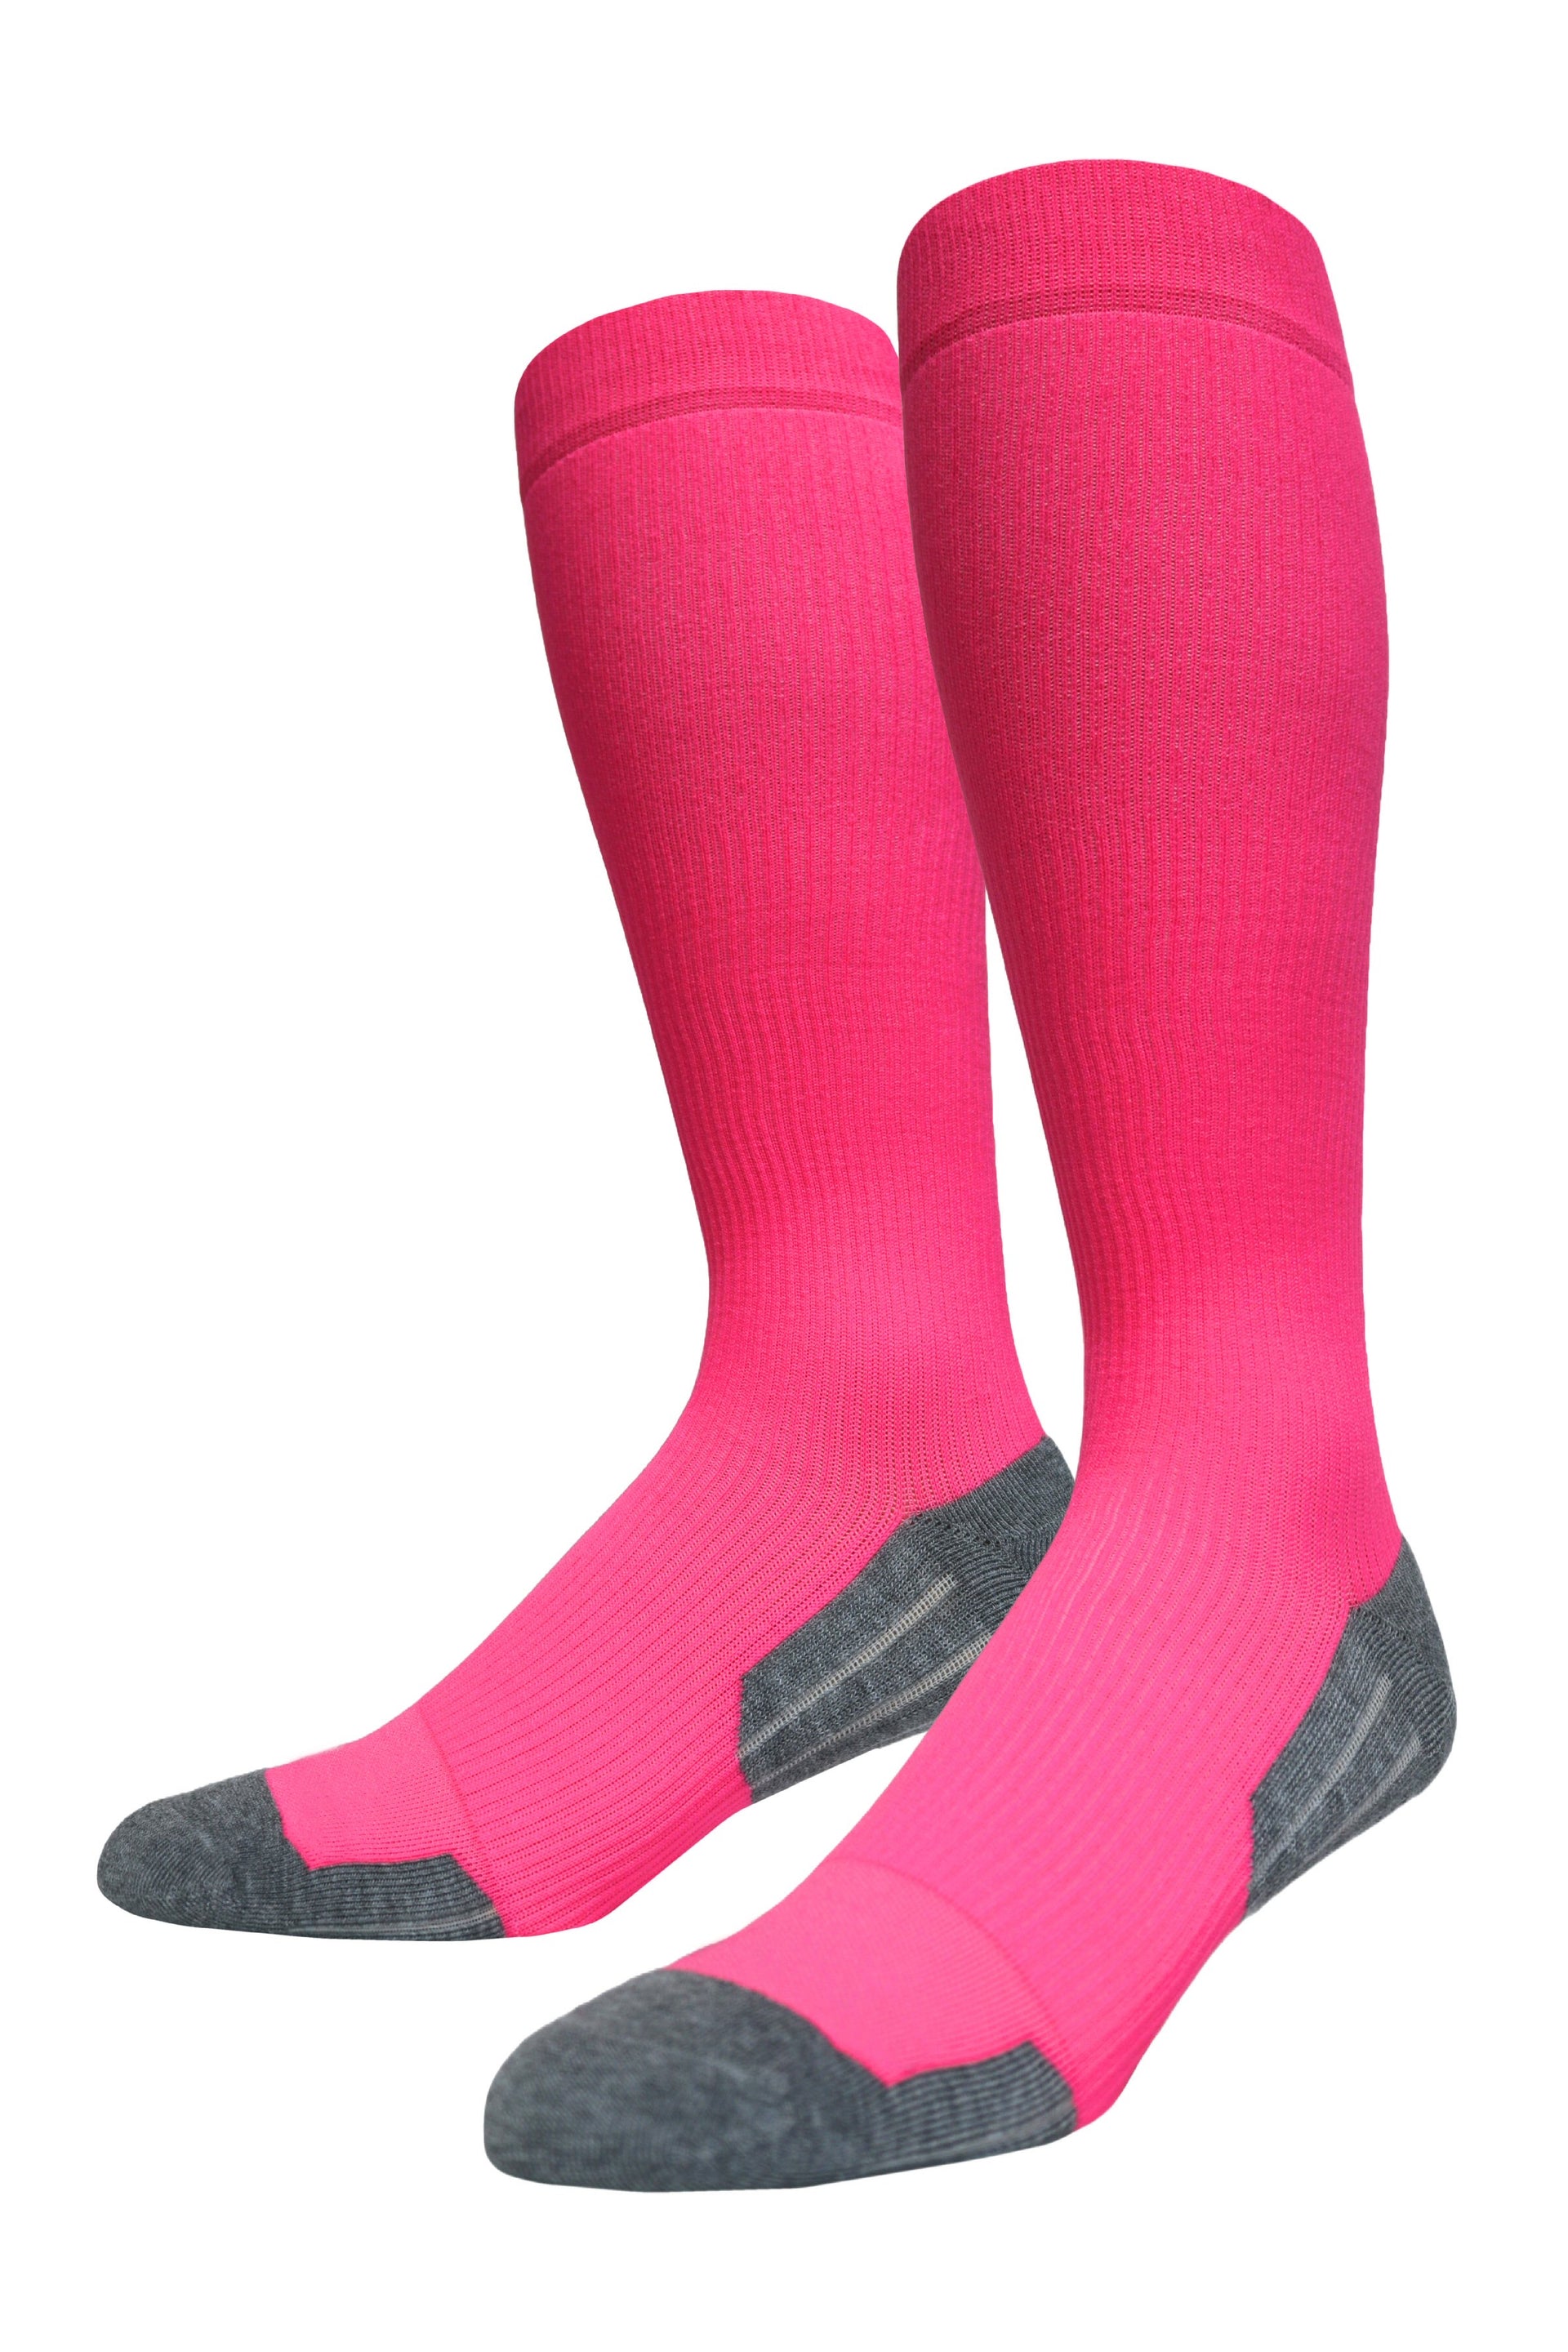 SKINS Skins ESSENTIAL - Calf Compression Sleeves - black/pink